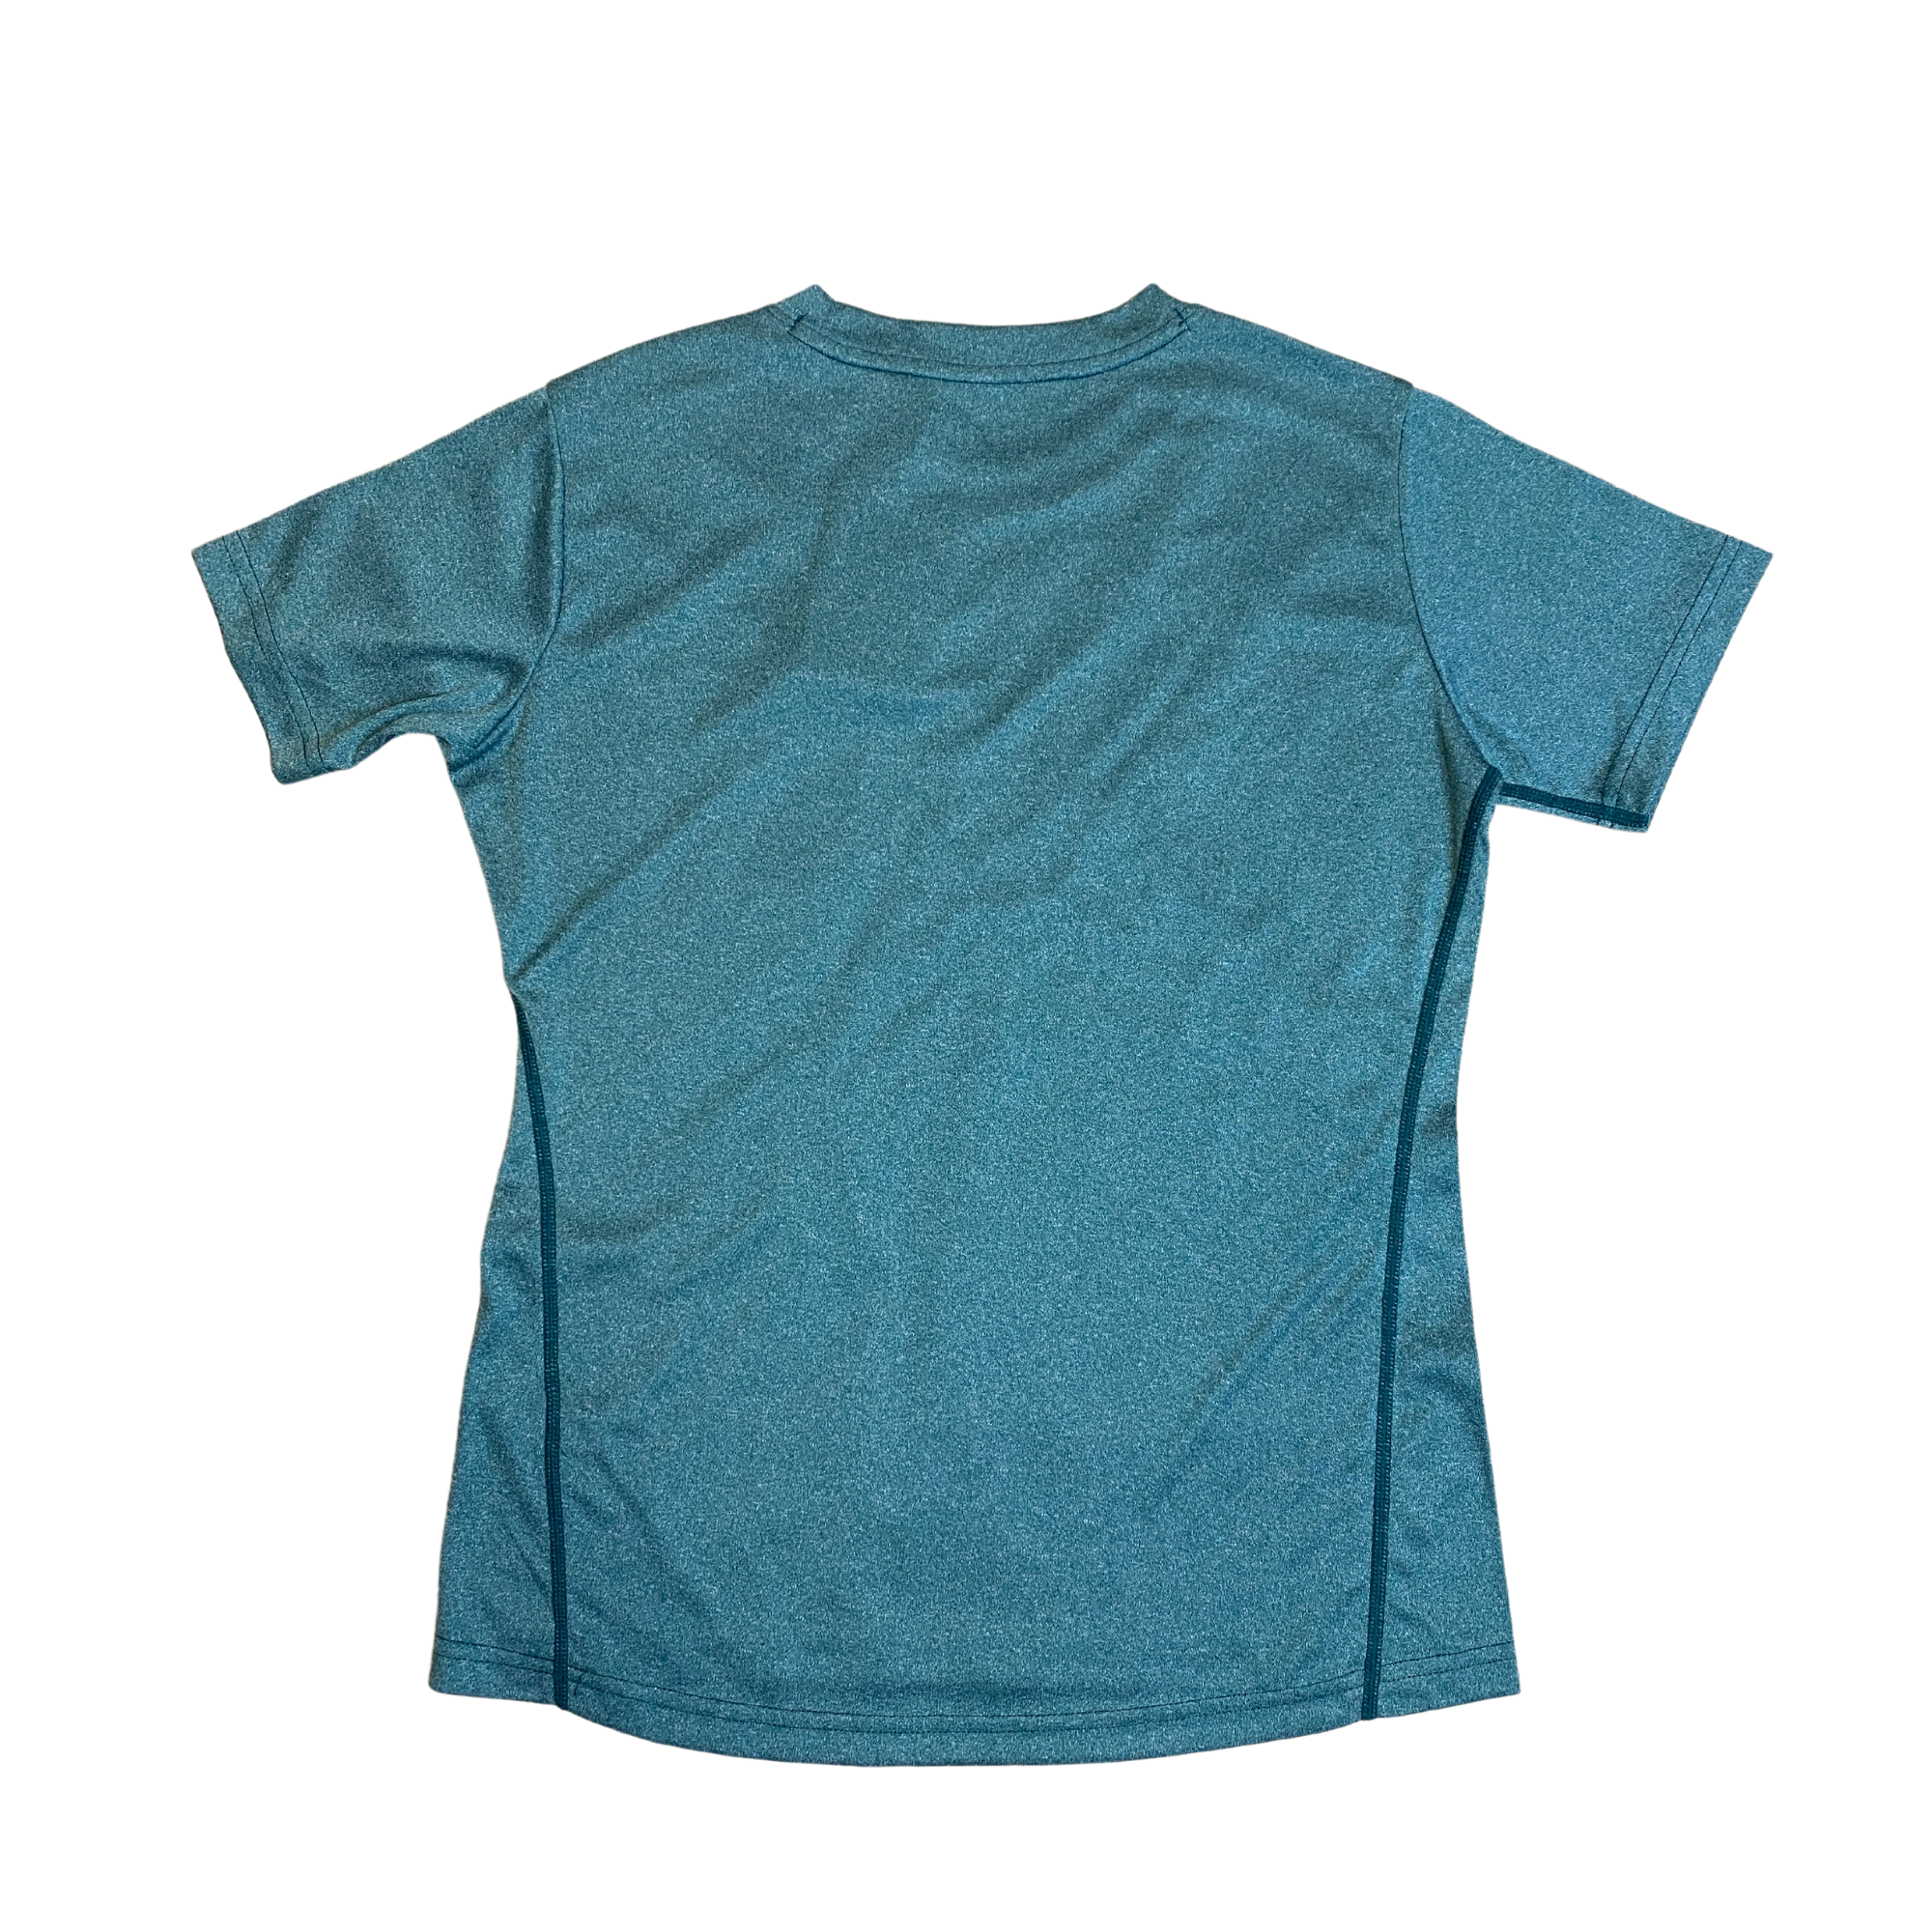 Walkabout Outfitter Walkabout Women's Tech T-Shirt Heat Transfer Log